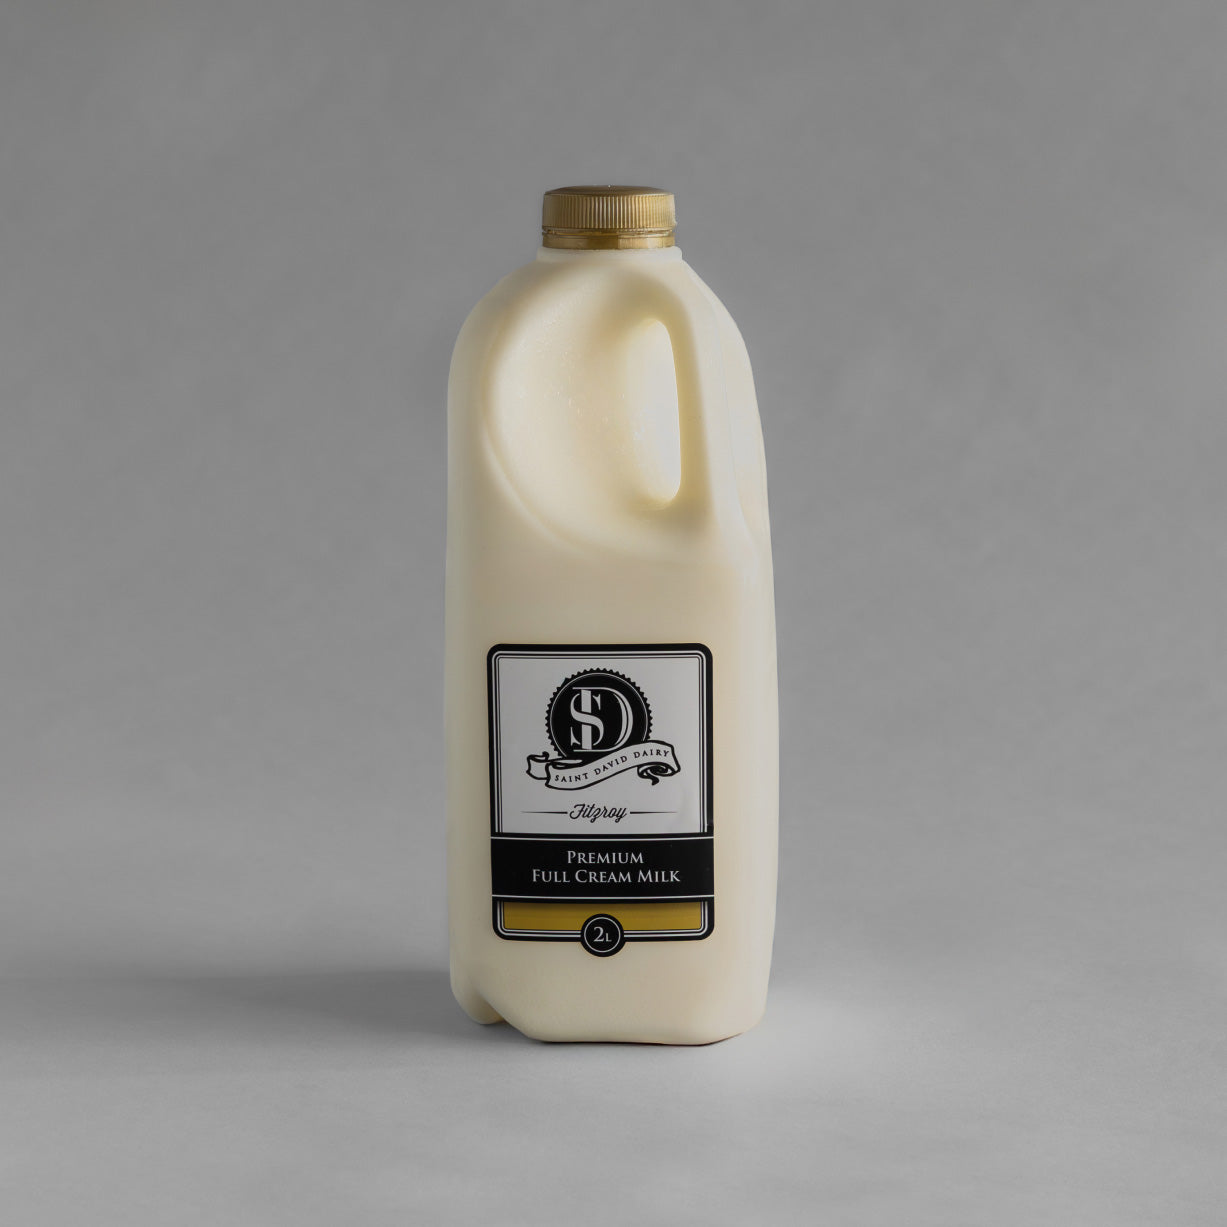 Saint David Dairy Full Cream Milk